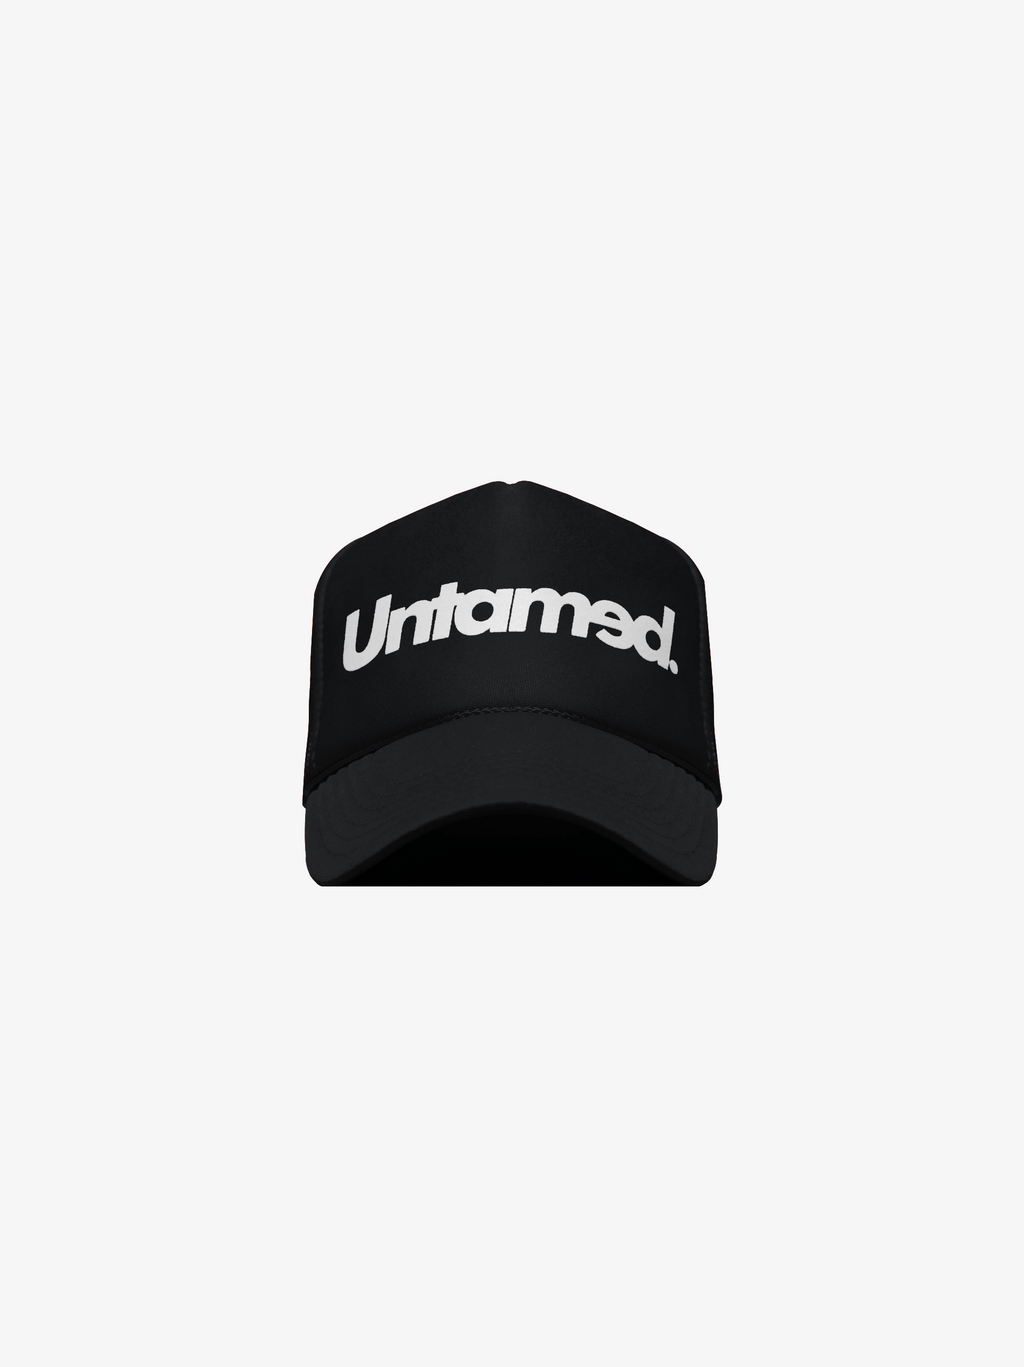 Untamed Classic Black Trucker Hat